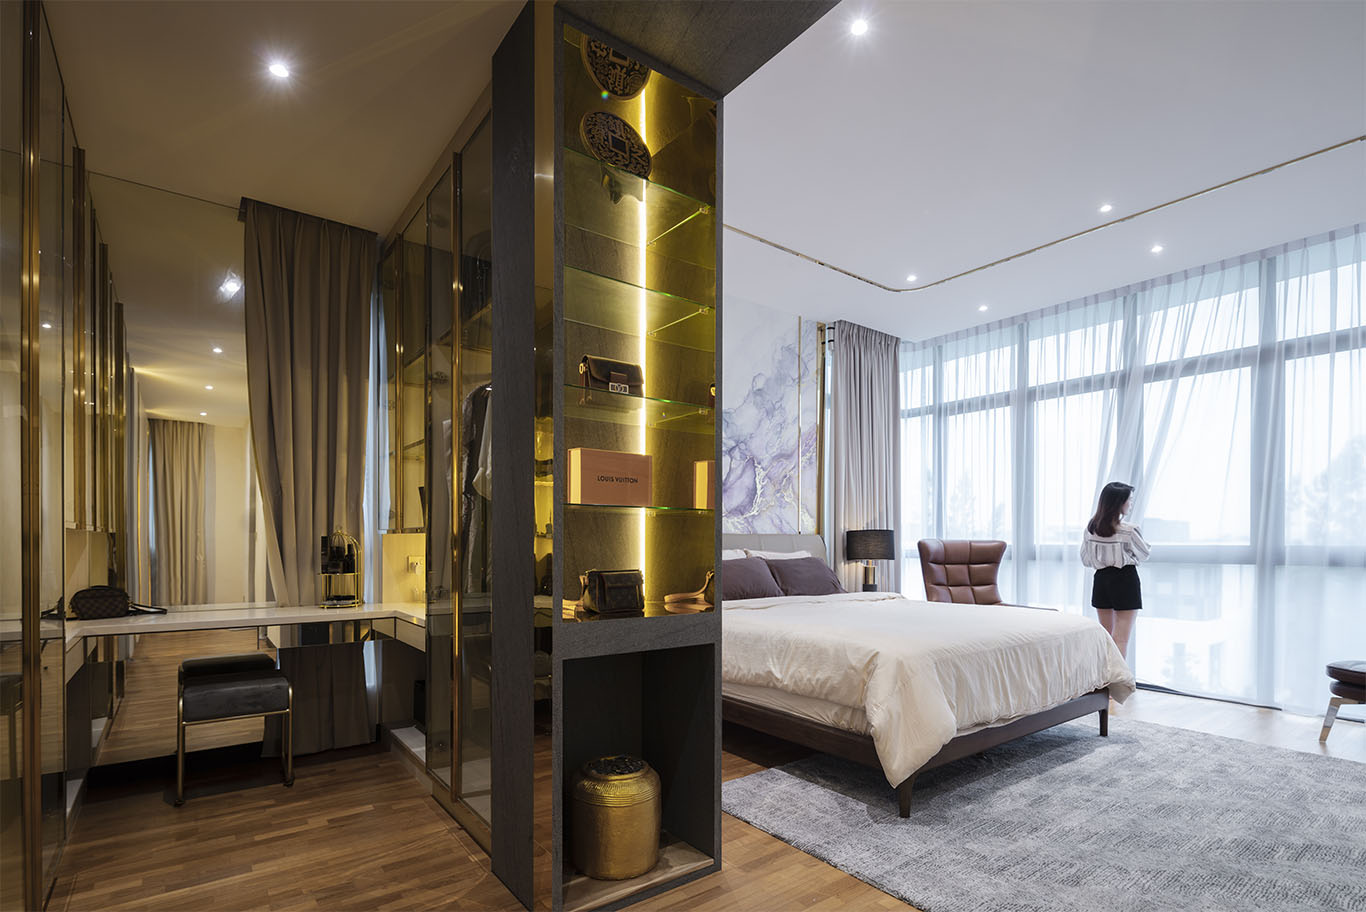 MIEUX La Famillie De Lee modern dark walk in closet with gold lighting and wooden floor mieux interior design